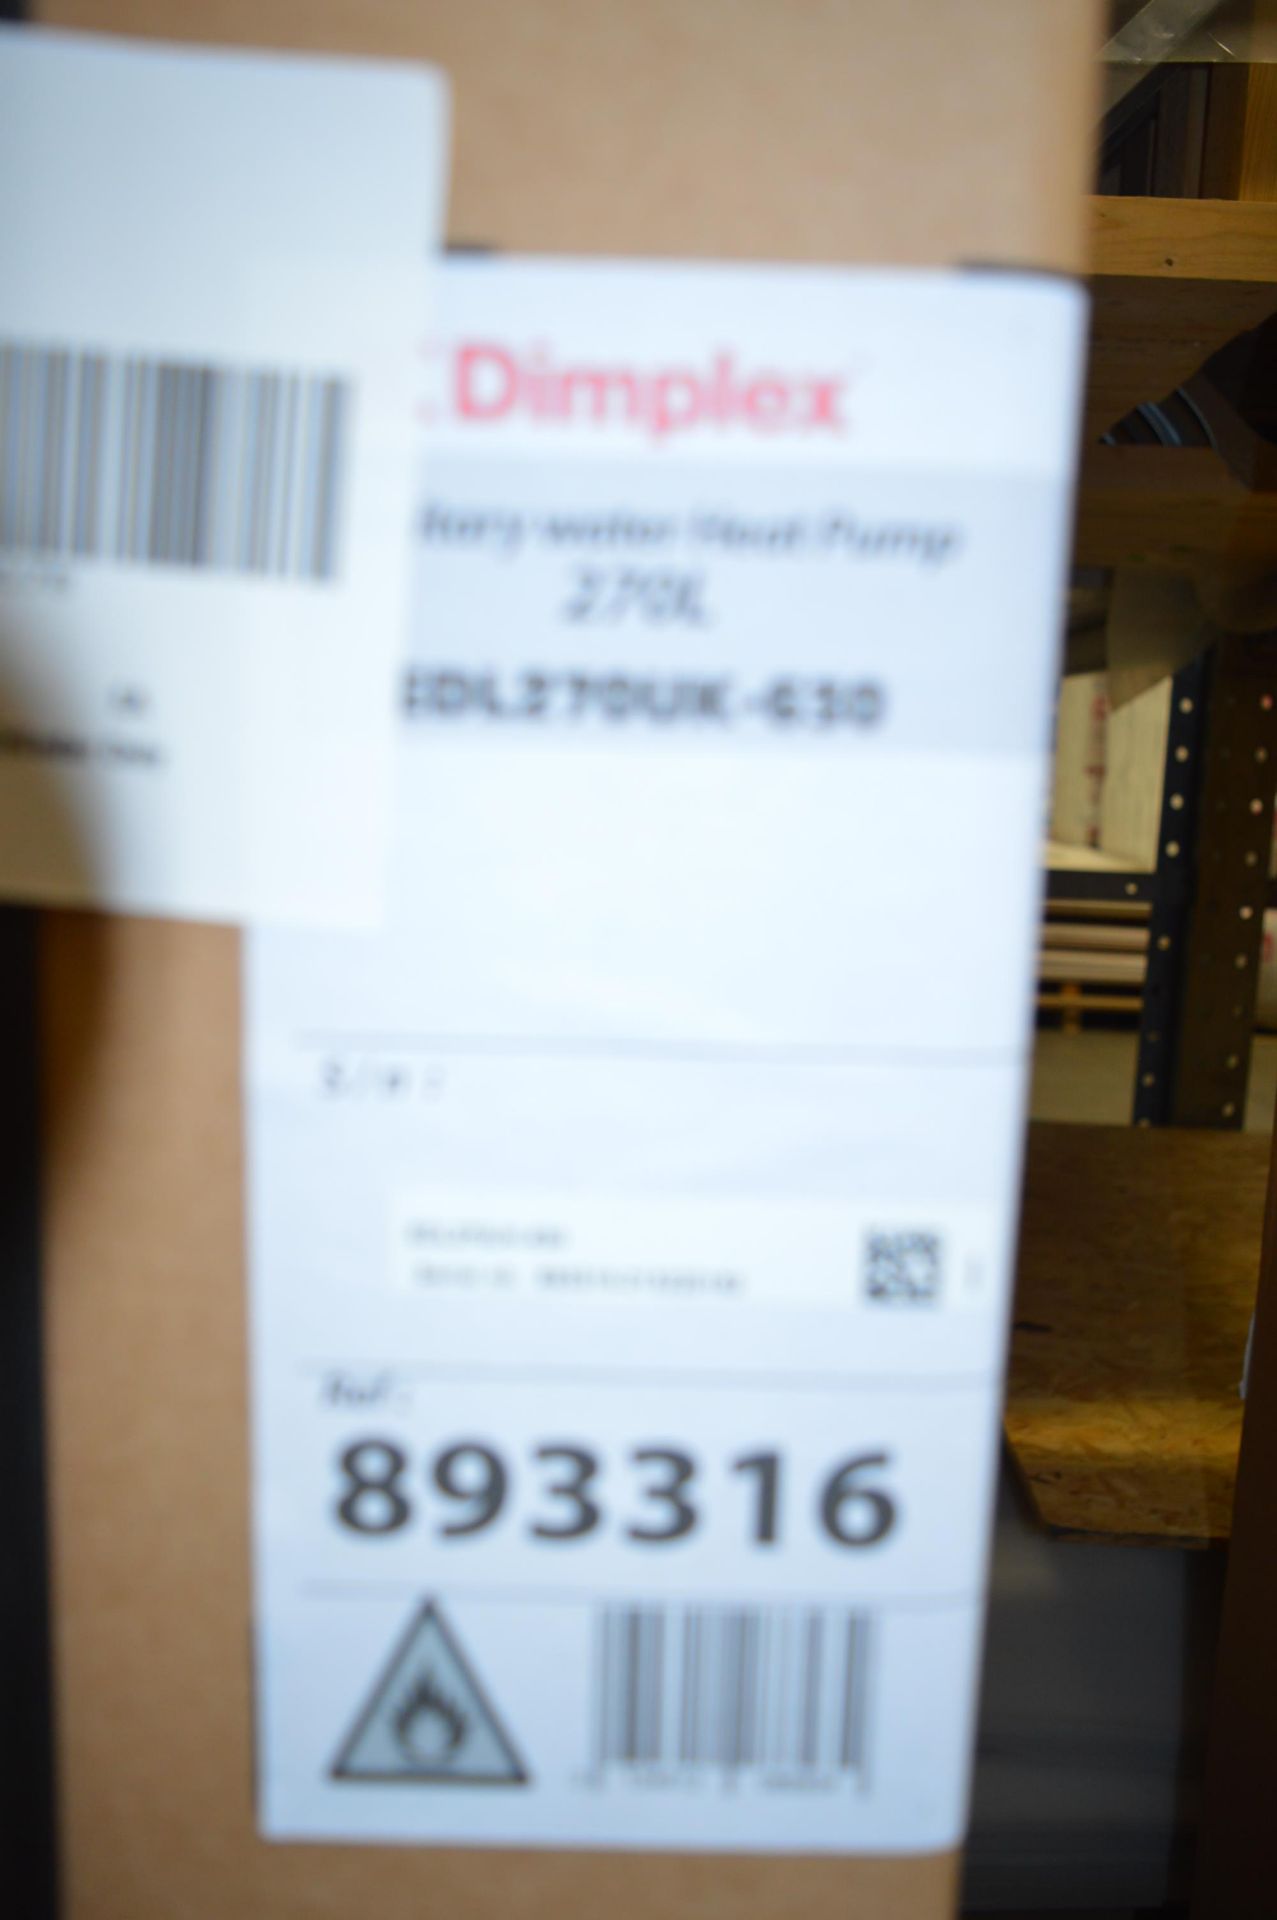 Dimplex, sanitary water heat pump, 270L, Model EDL270UK-630, Serial No. 893316-215220182 (packaged) - Image 2 of 2